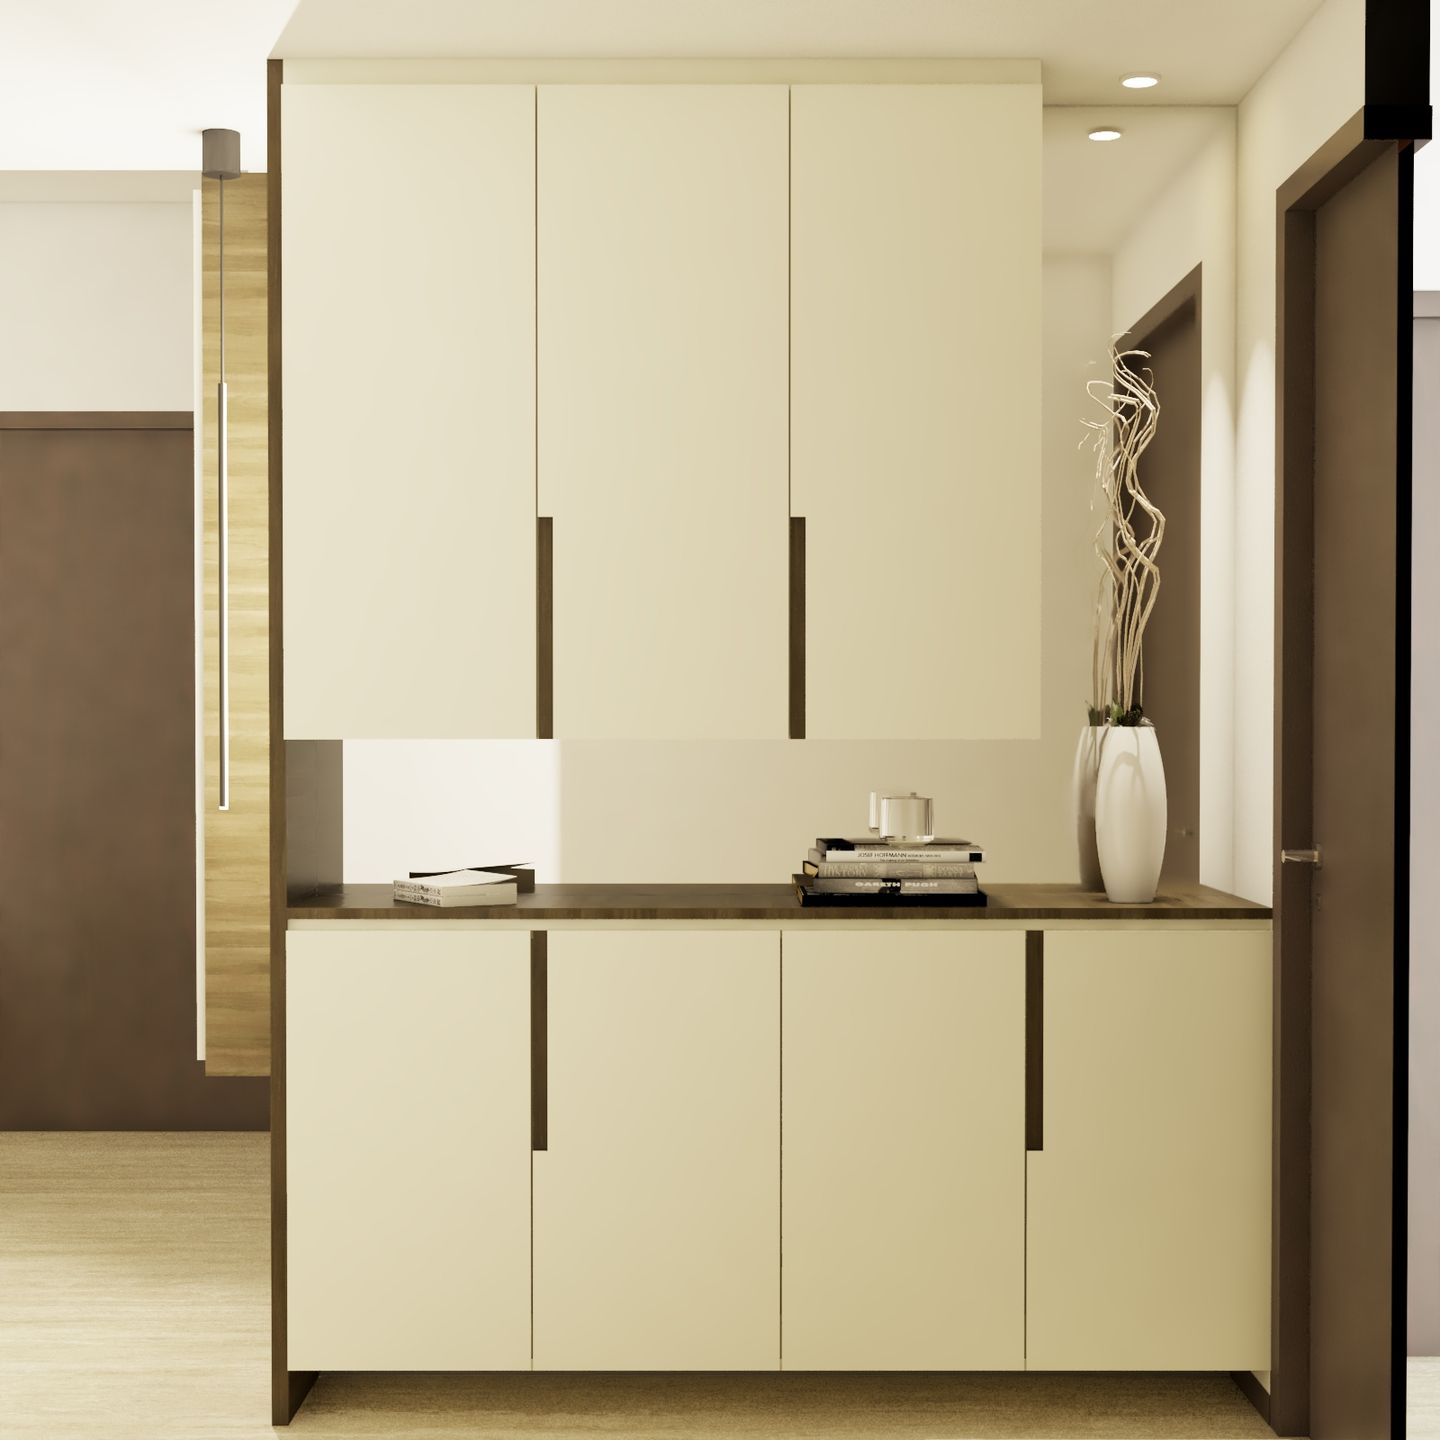 Cream And Brown Laminates Design For Storage Cabinets - Livspace